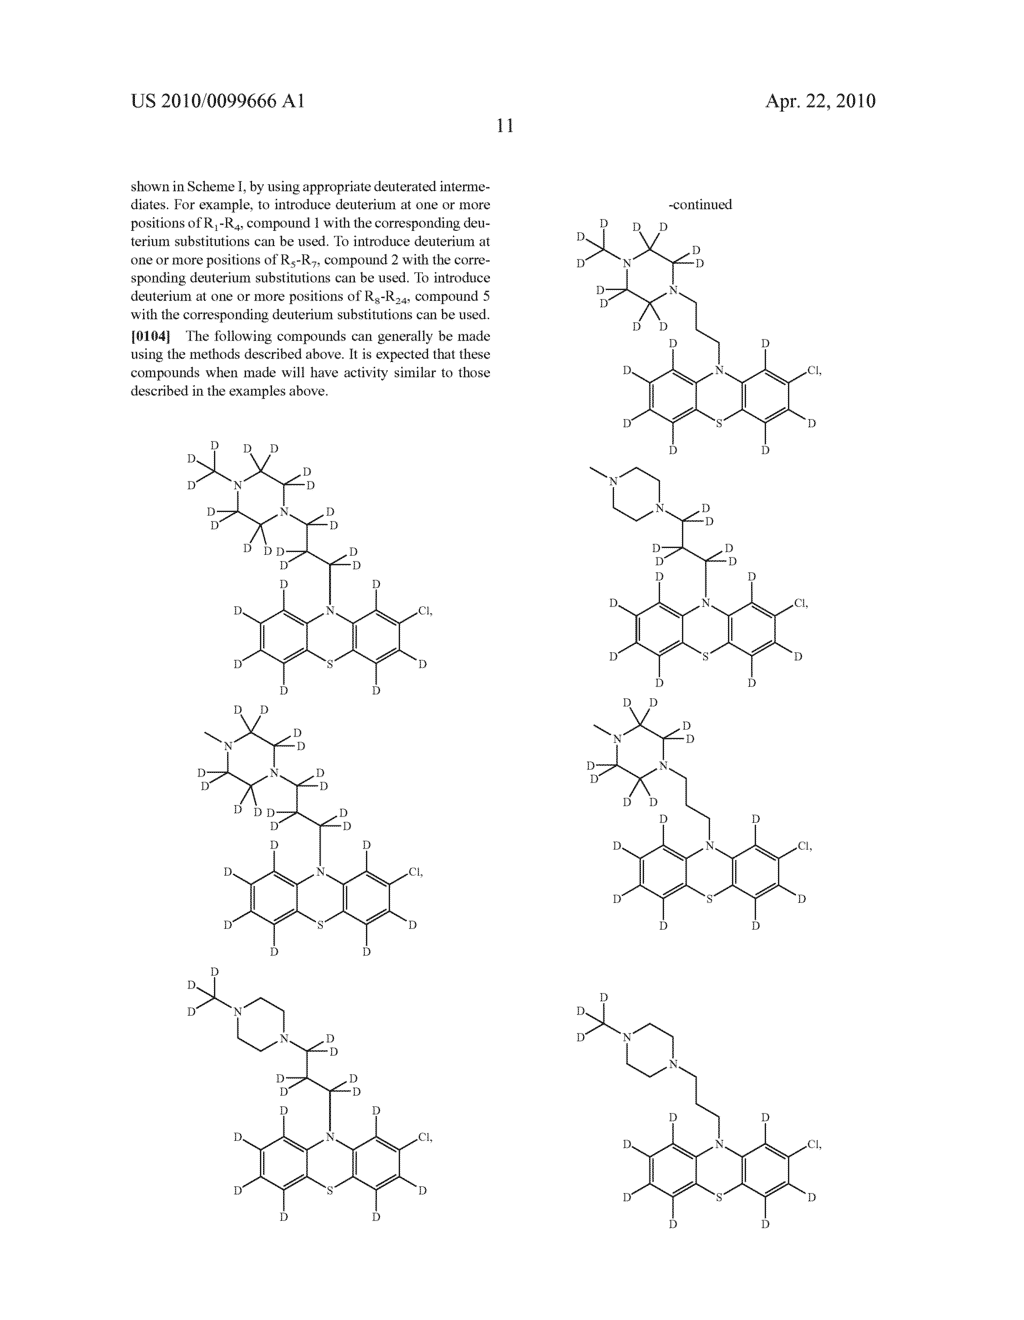 PHENOTHIAZINE MODULATORS OF H1 RECEPTOR AND D2 RECEPTOR - diagram, schematic, and image 12